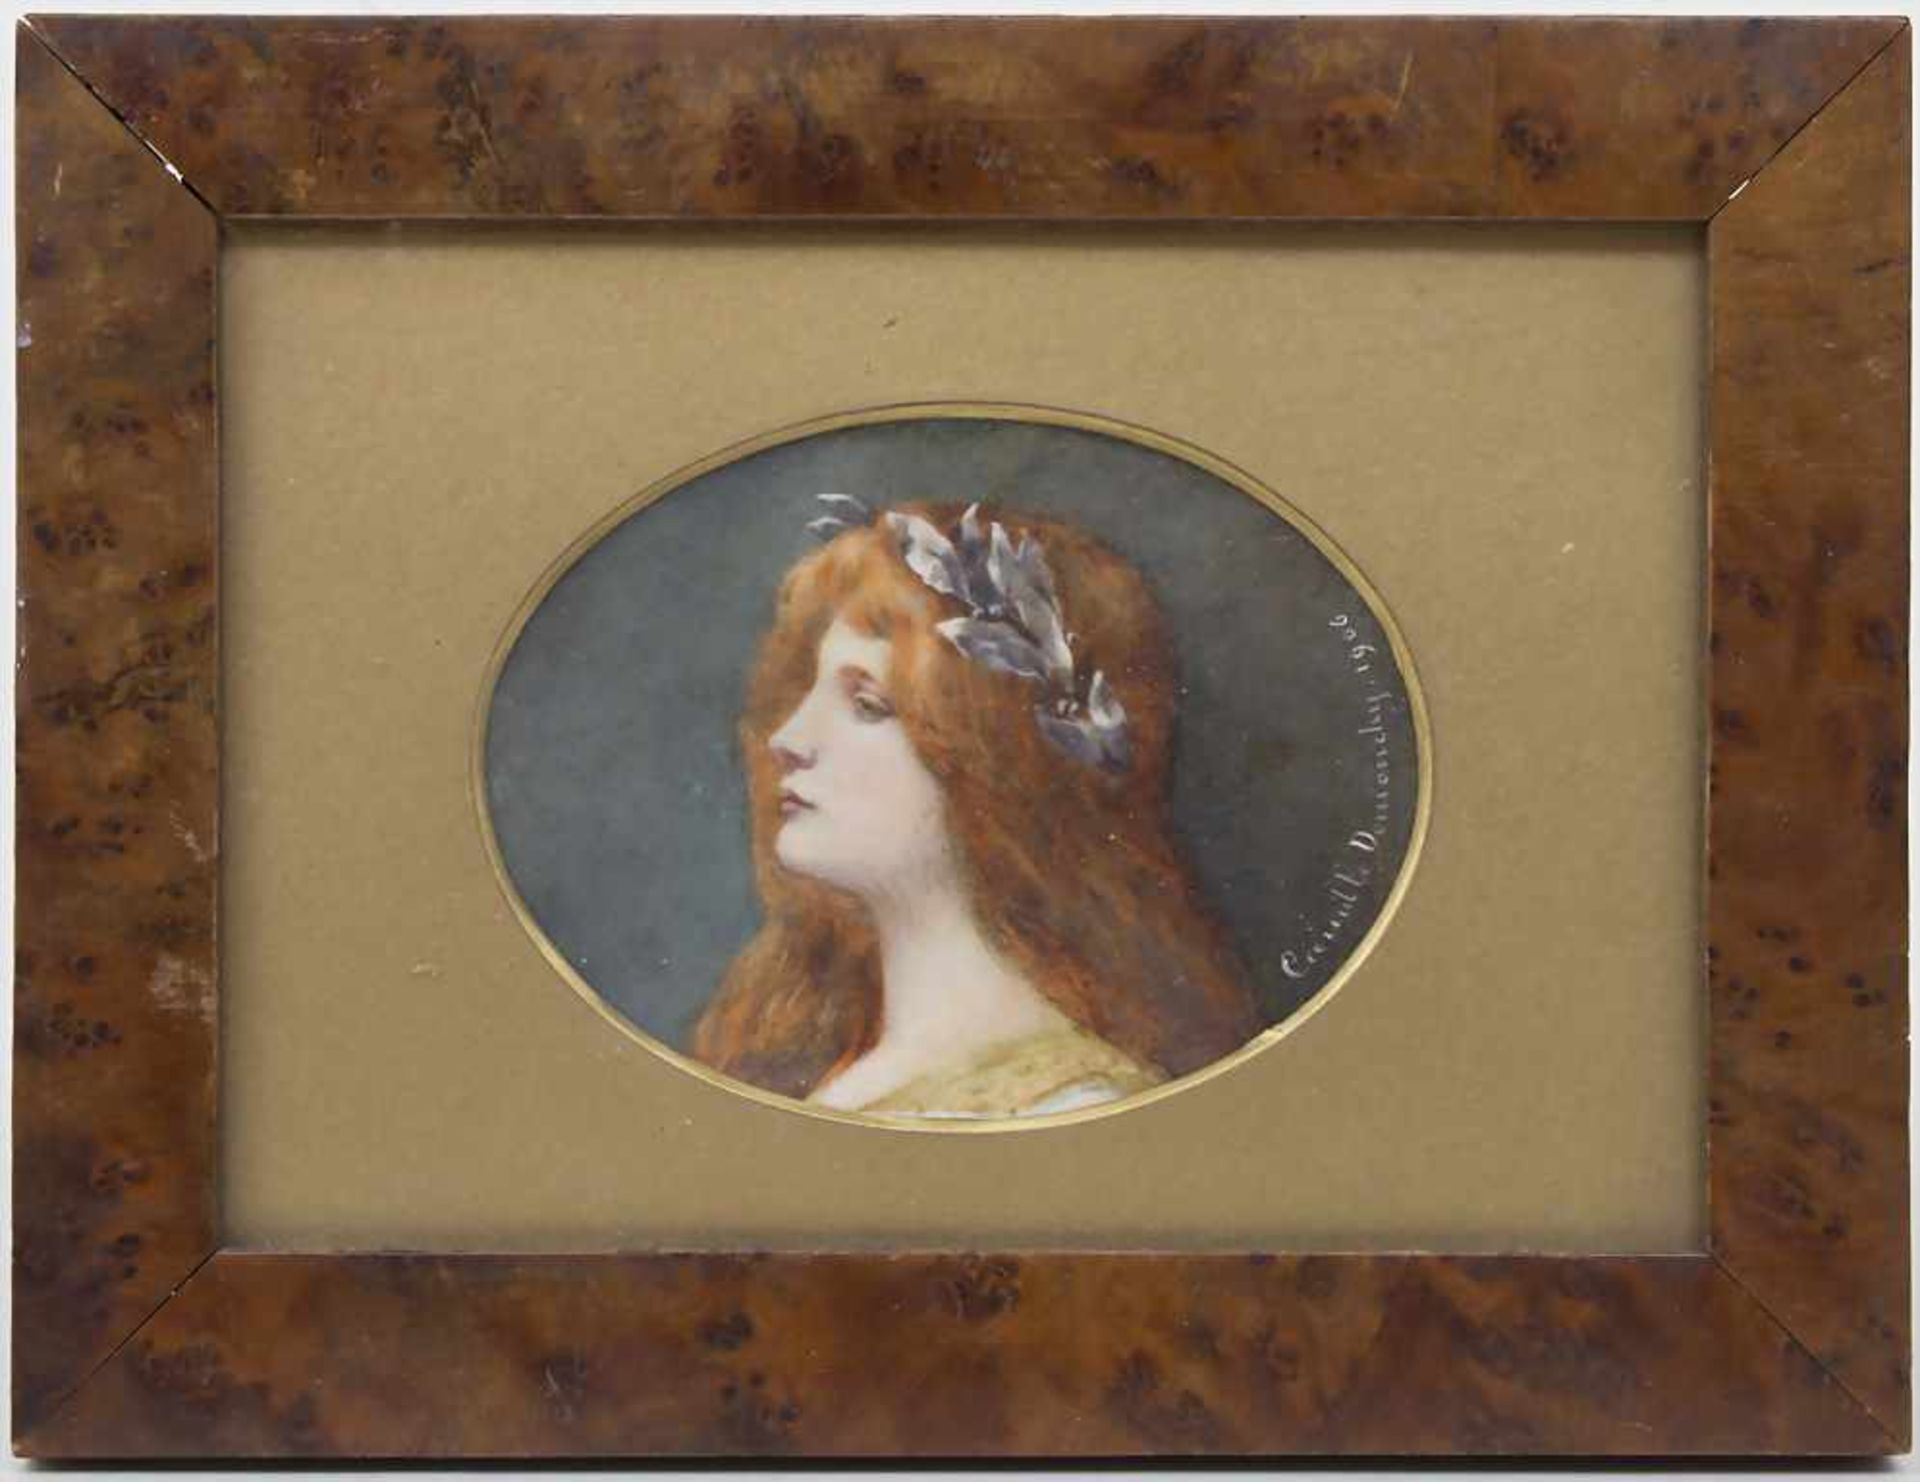 Jugendstil / Präraffaeliten Miniatur einer jungen Frau / An Art Nouveau / Pre Raphaelite miniature - Image 2 of 5